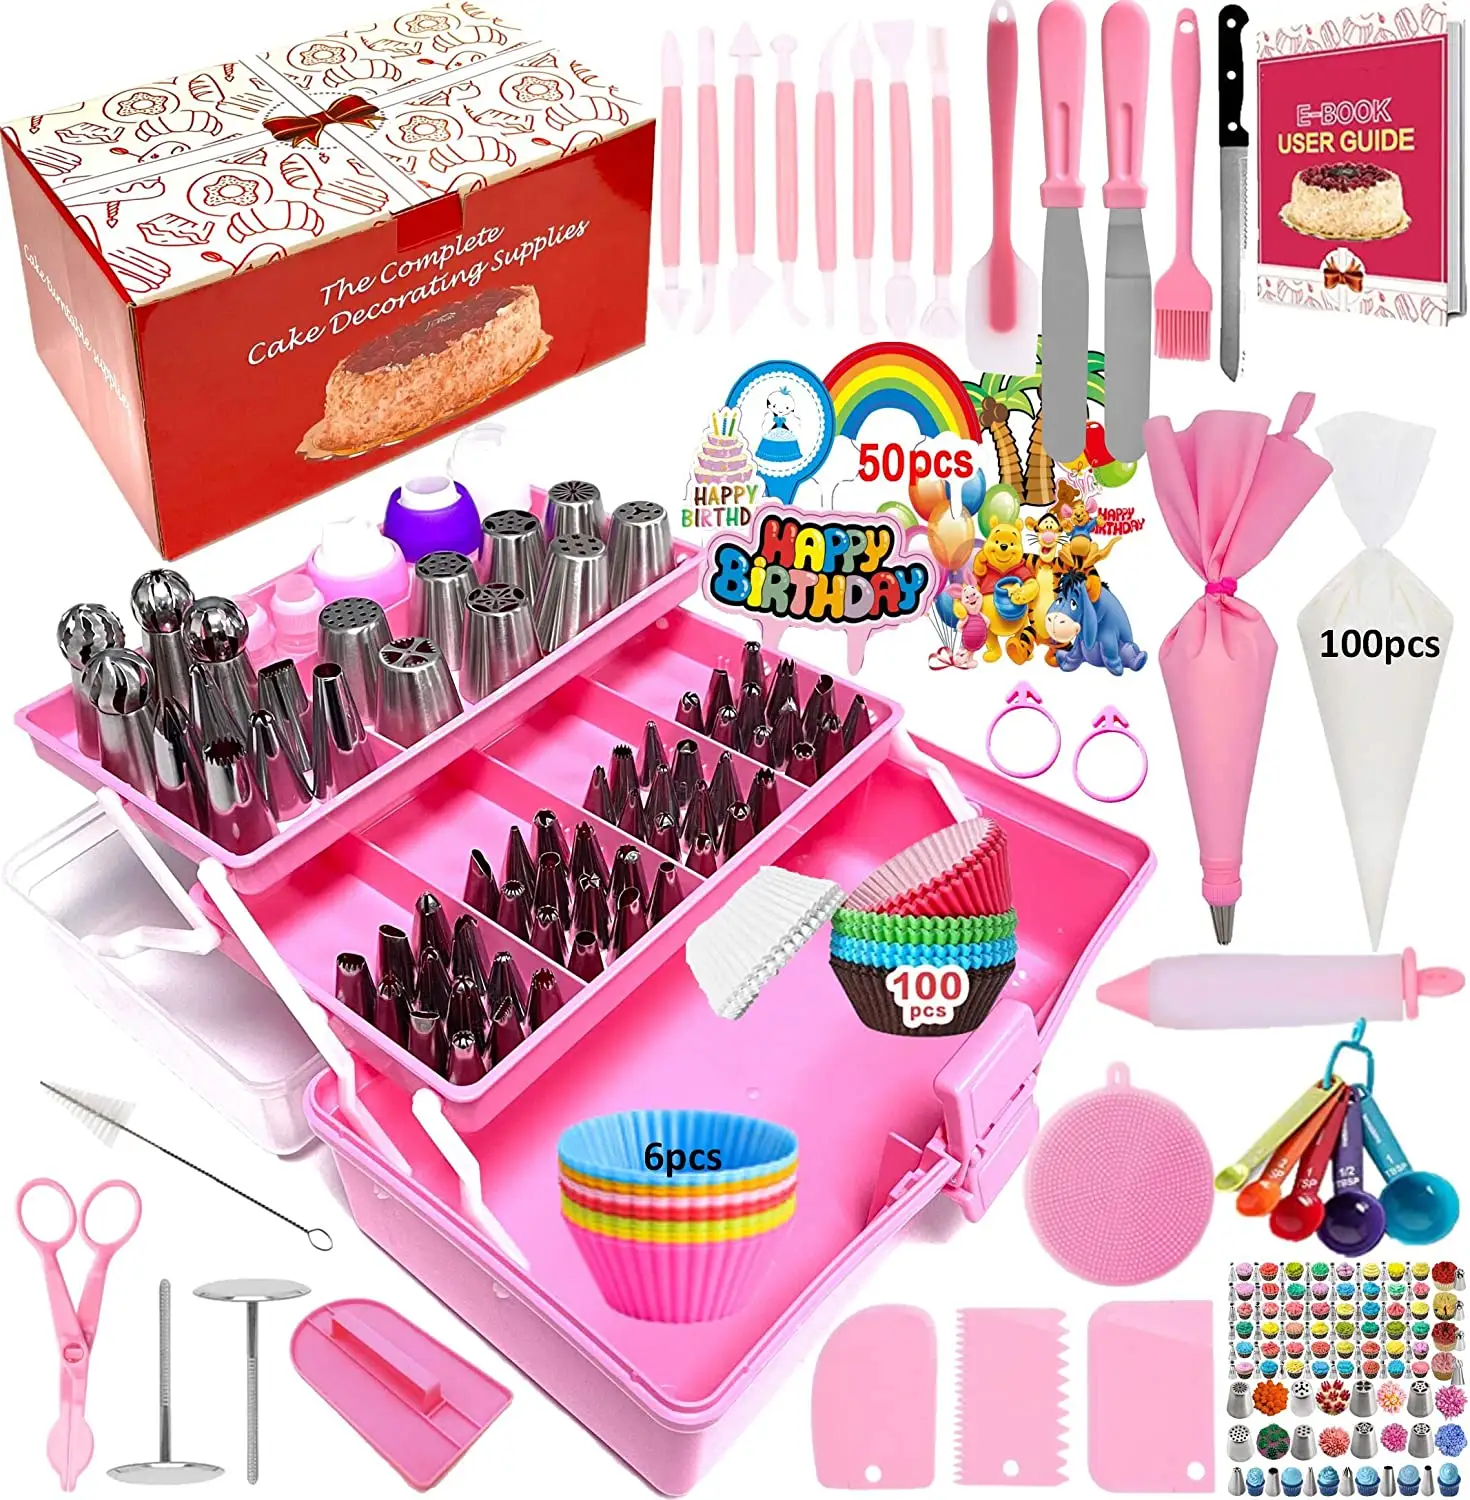 ODM OEM 359Pcs Baking Pastry Cake decorating set Cake tools Accessories Cake Decorating Supplies Kit Set Bakeware set